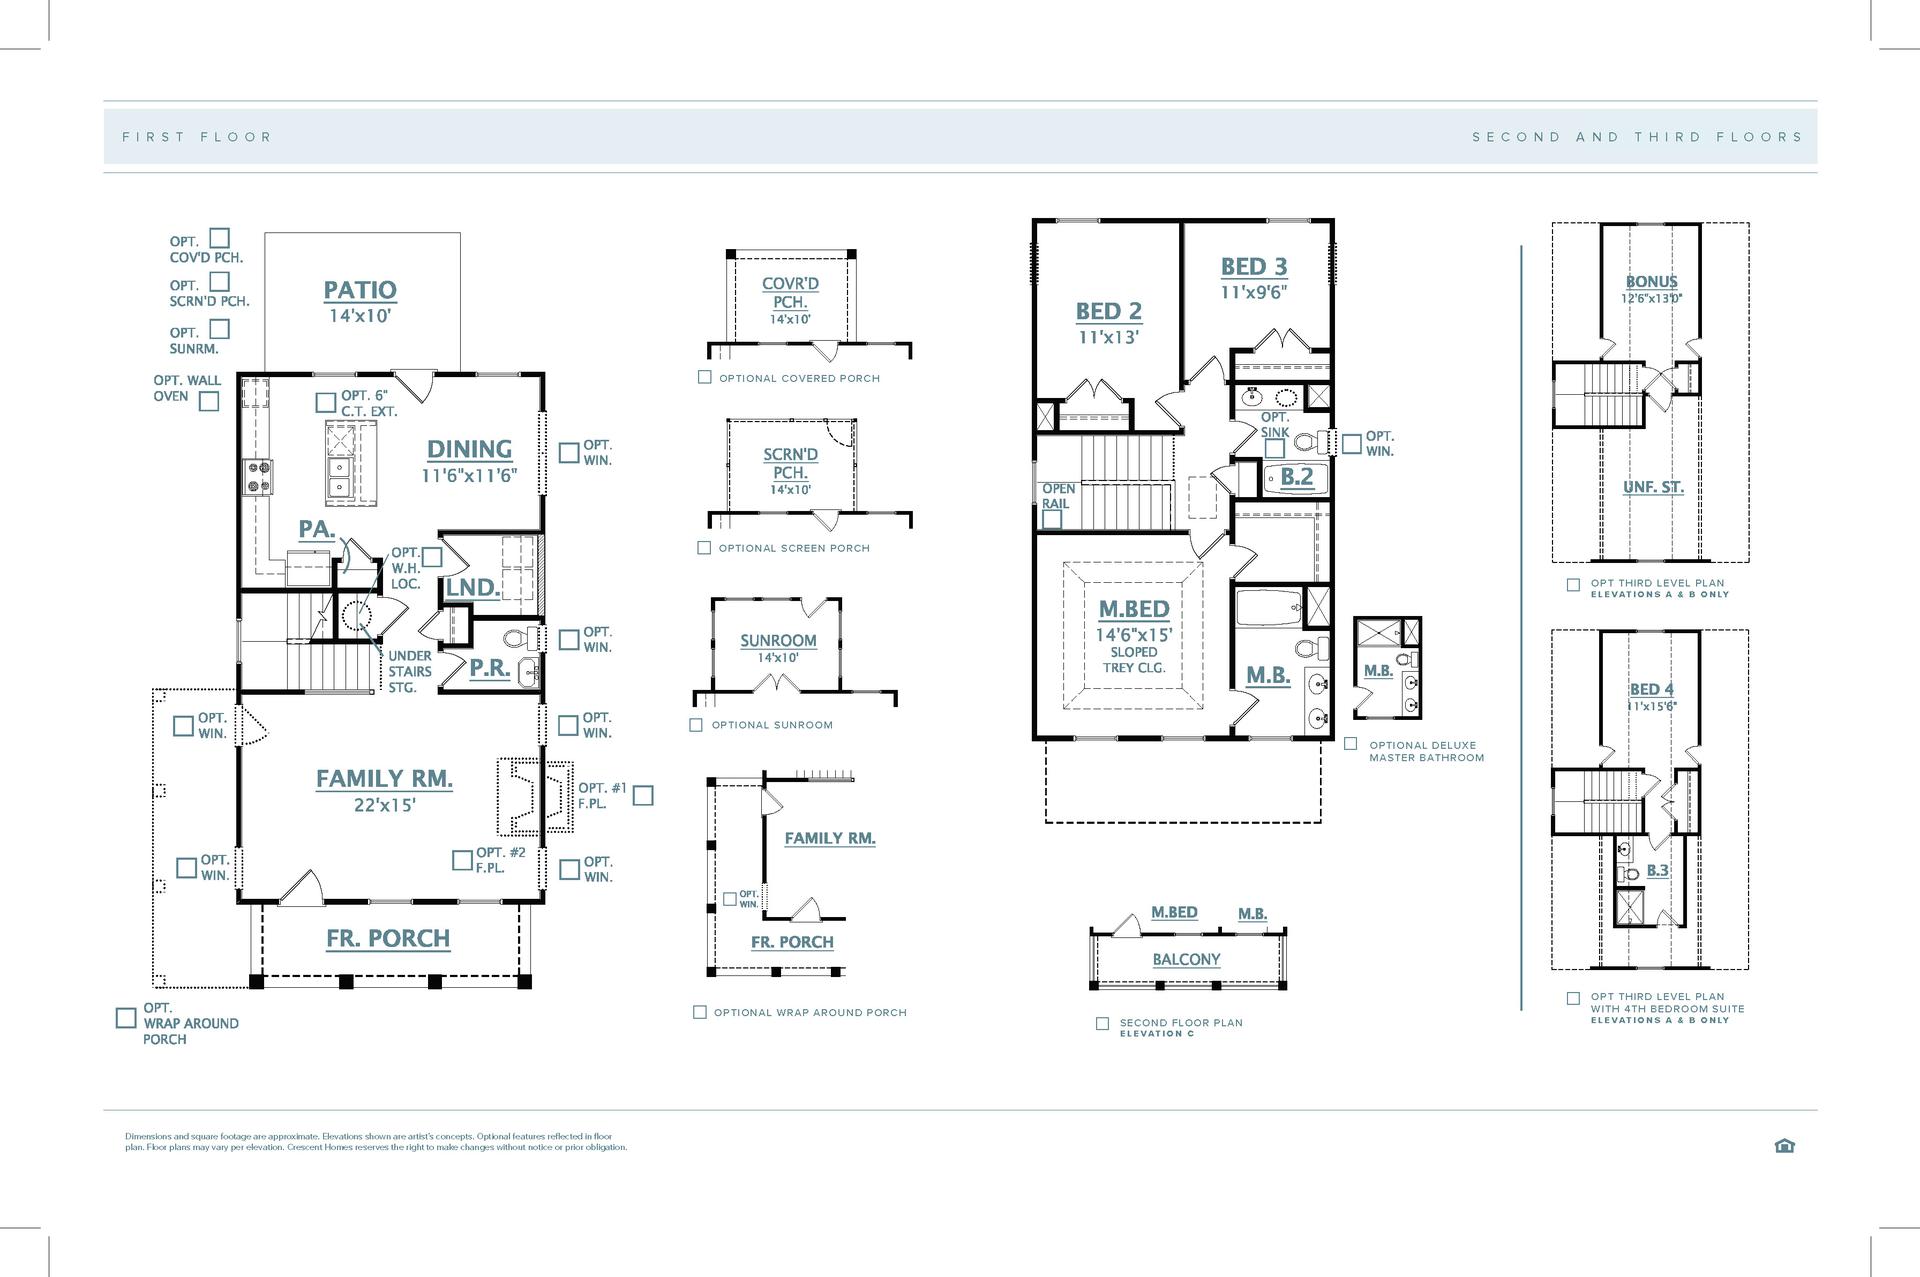 Richardson New Home Floorplan